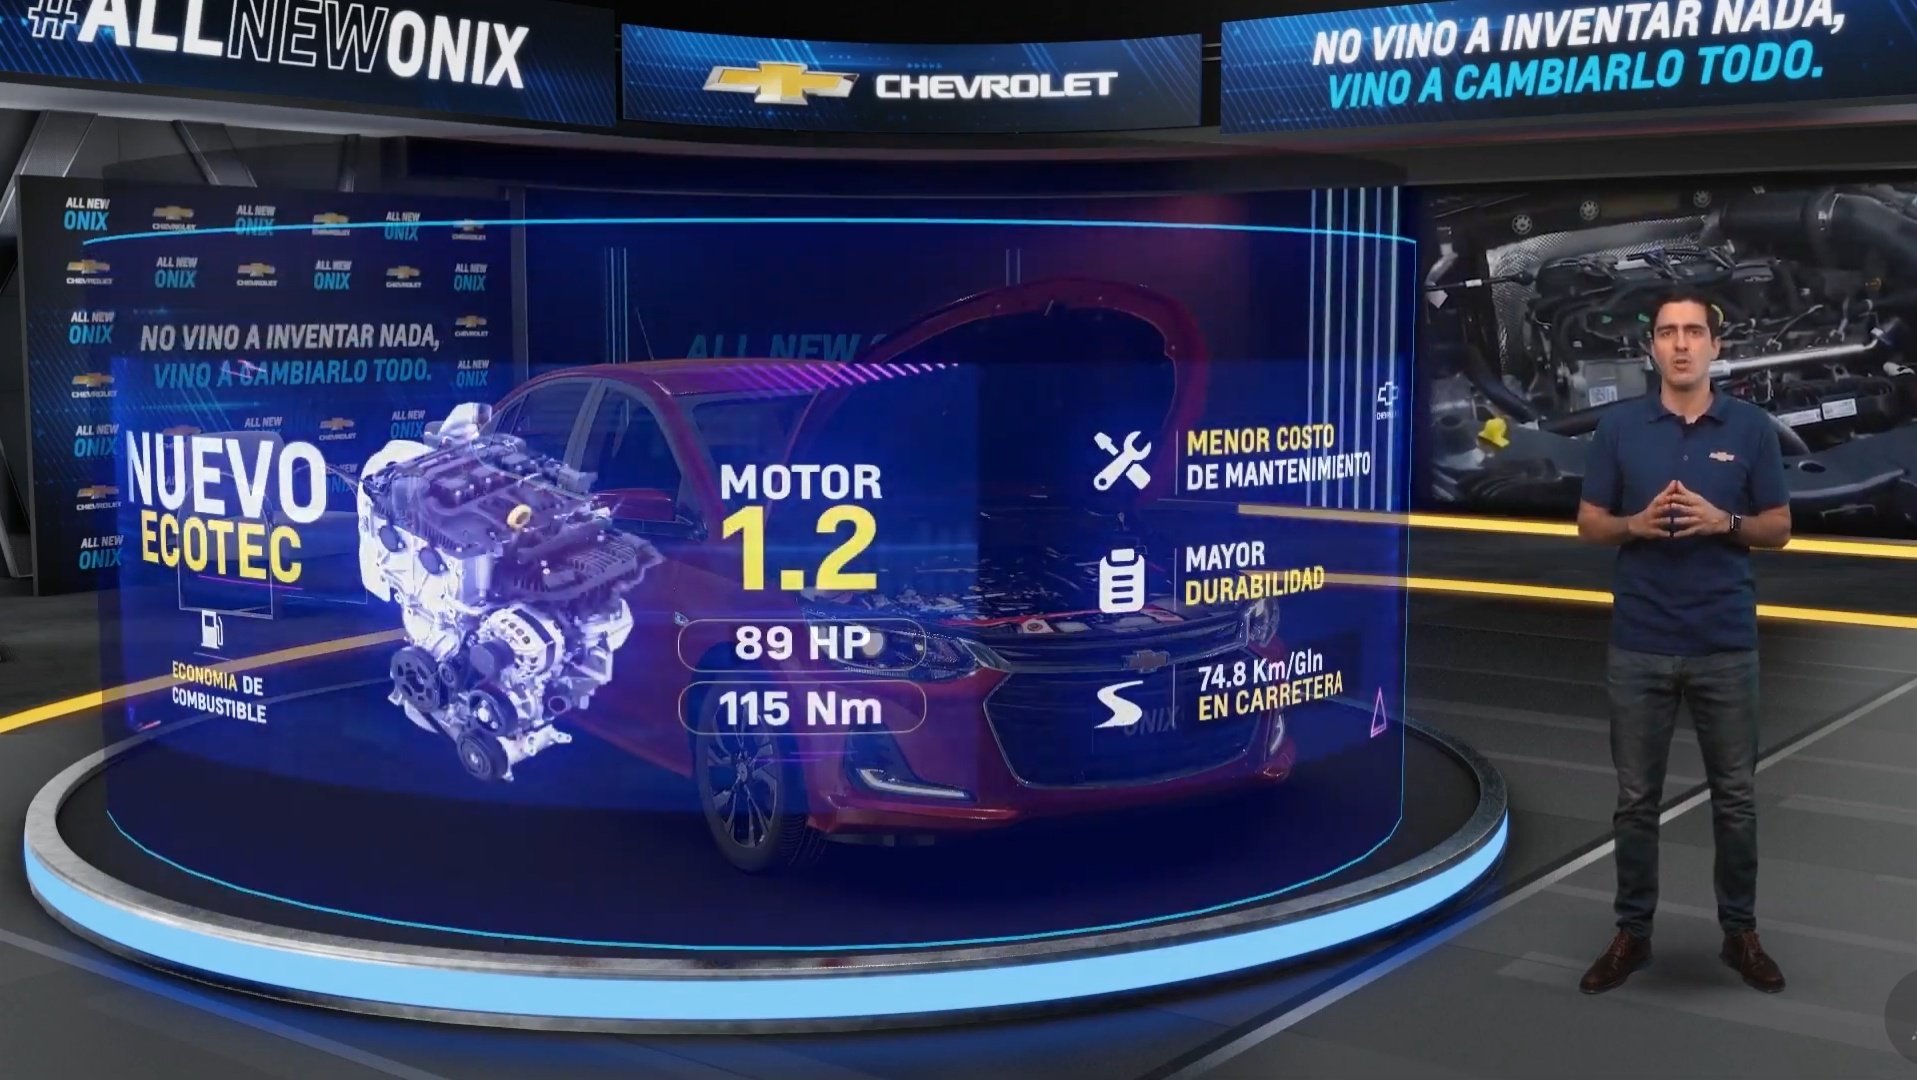 Chevrolet All New Onix